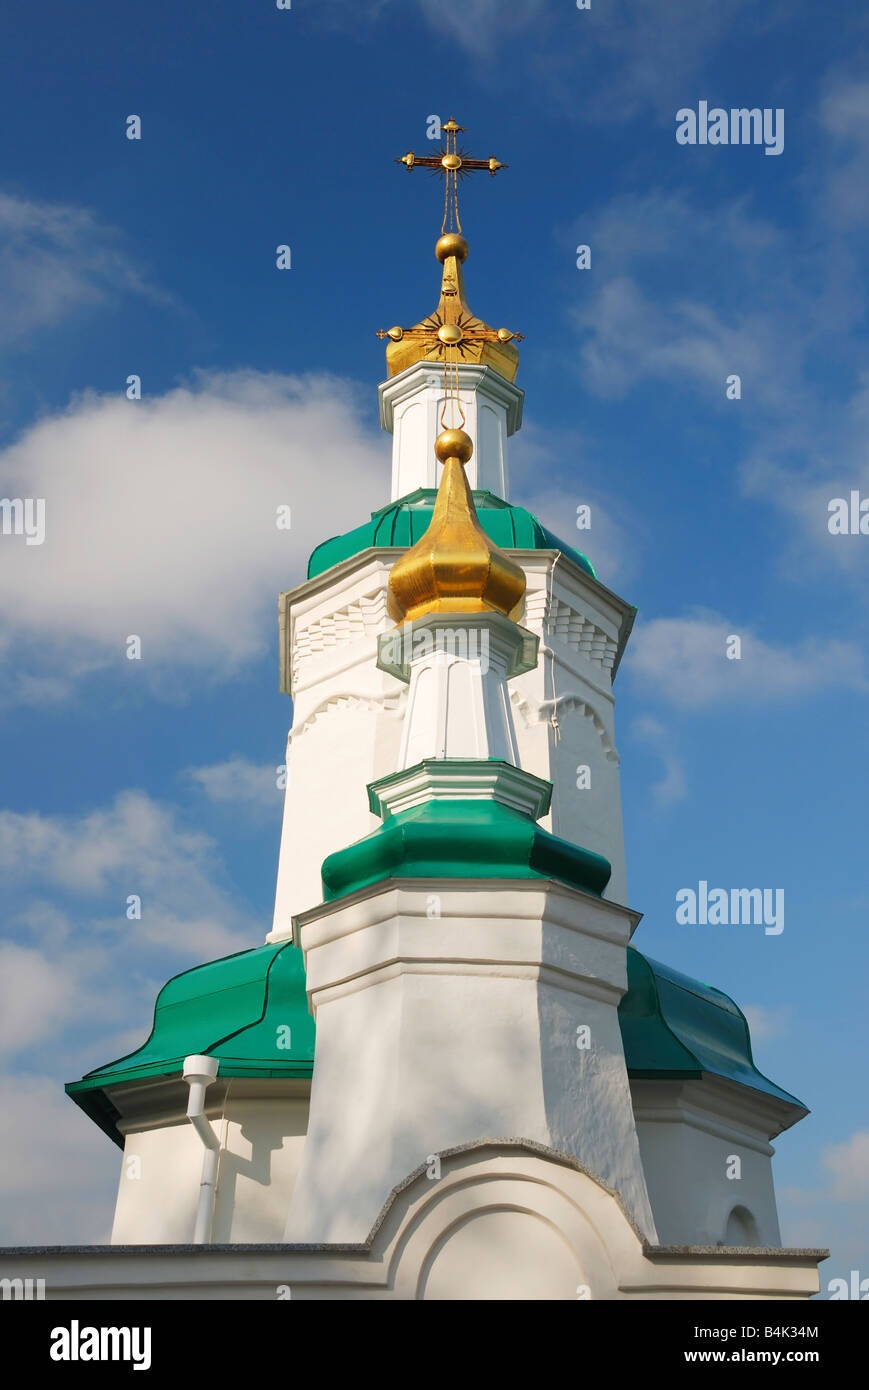 Towers of orthodox church with golden cupolas and cyan roofs against blue cloudy sky, Svyatogorskaya Svyato-Uspenskaya Lavra Stock Photo